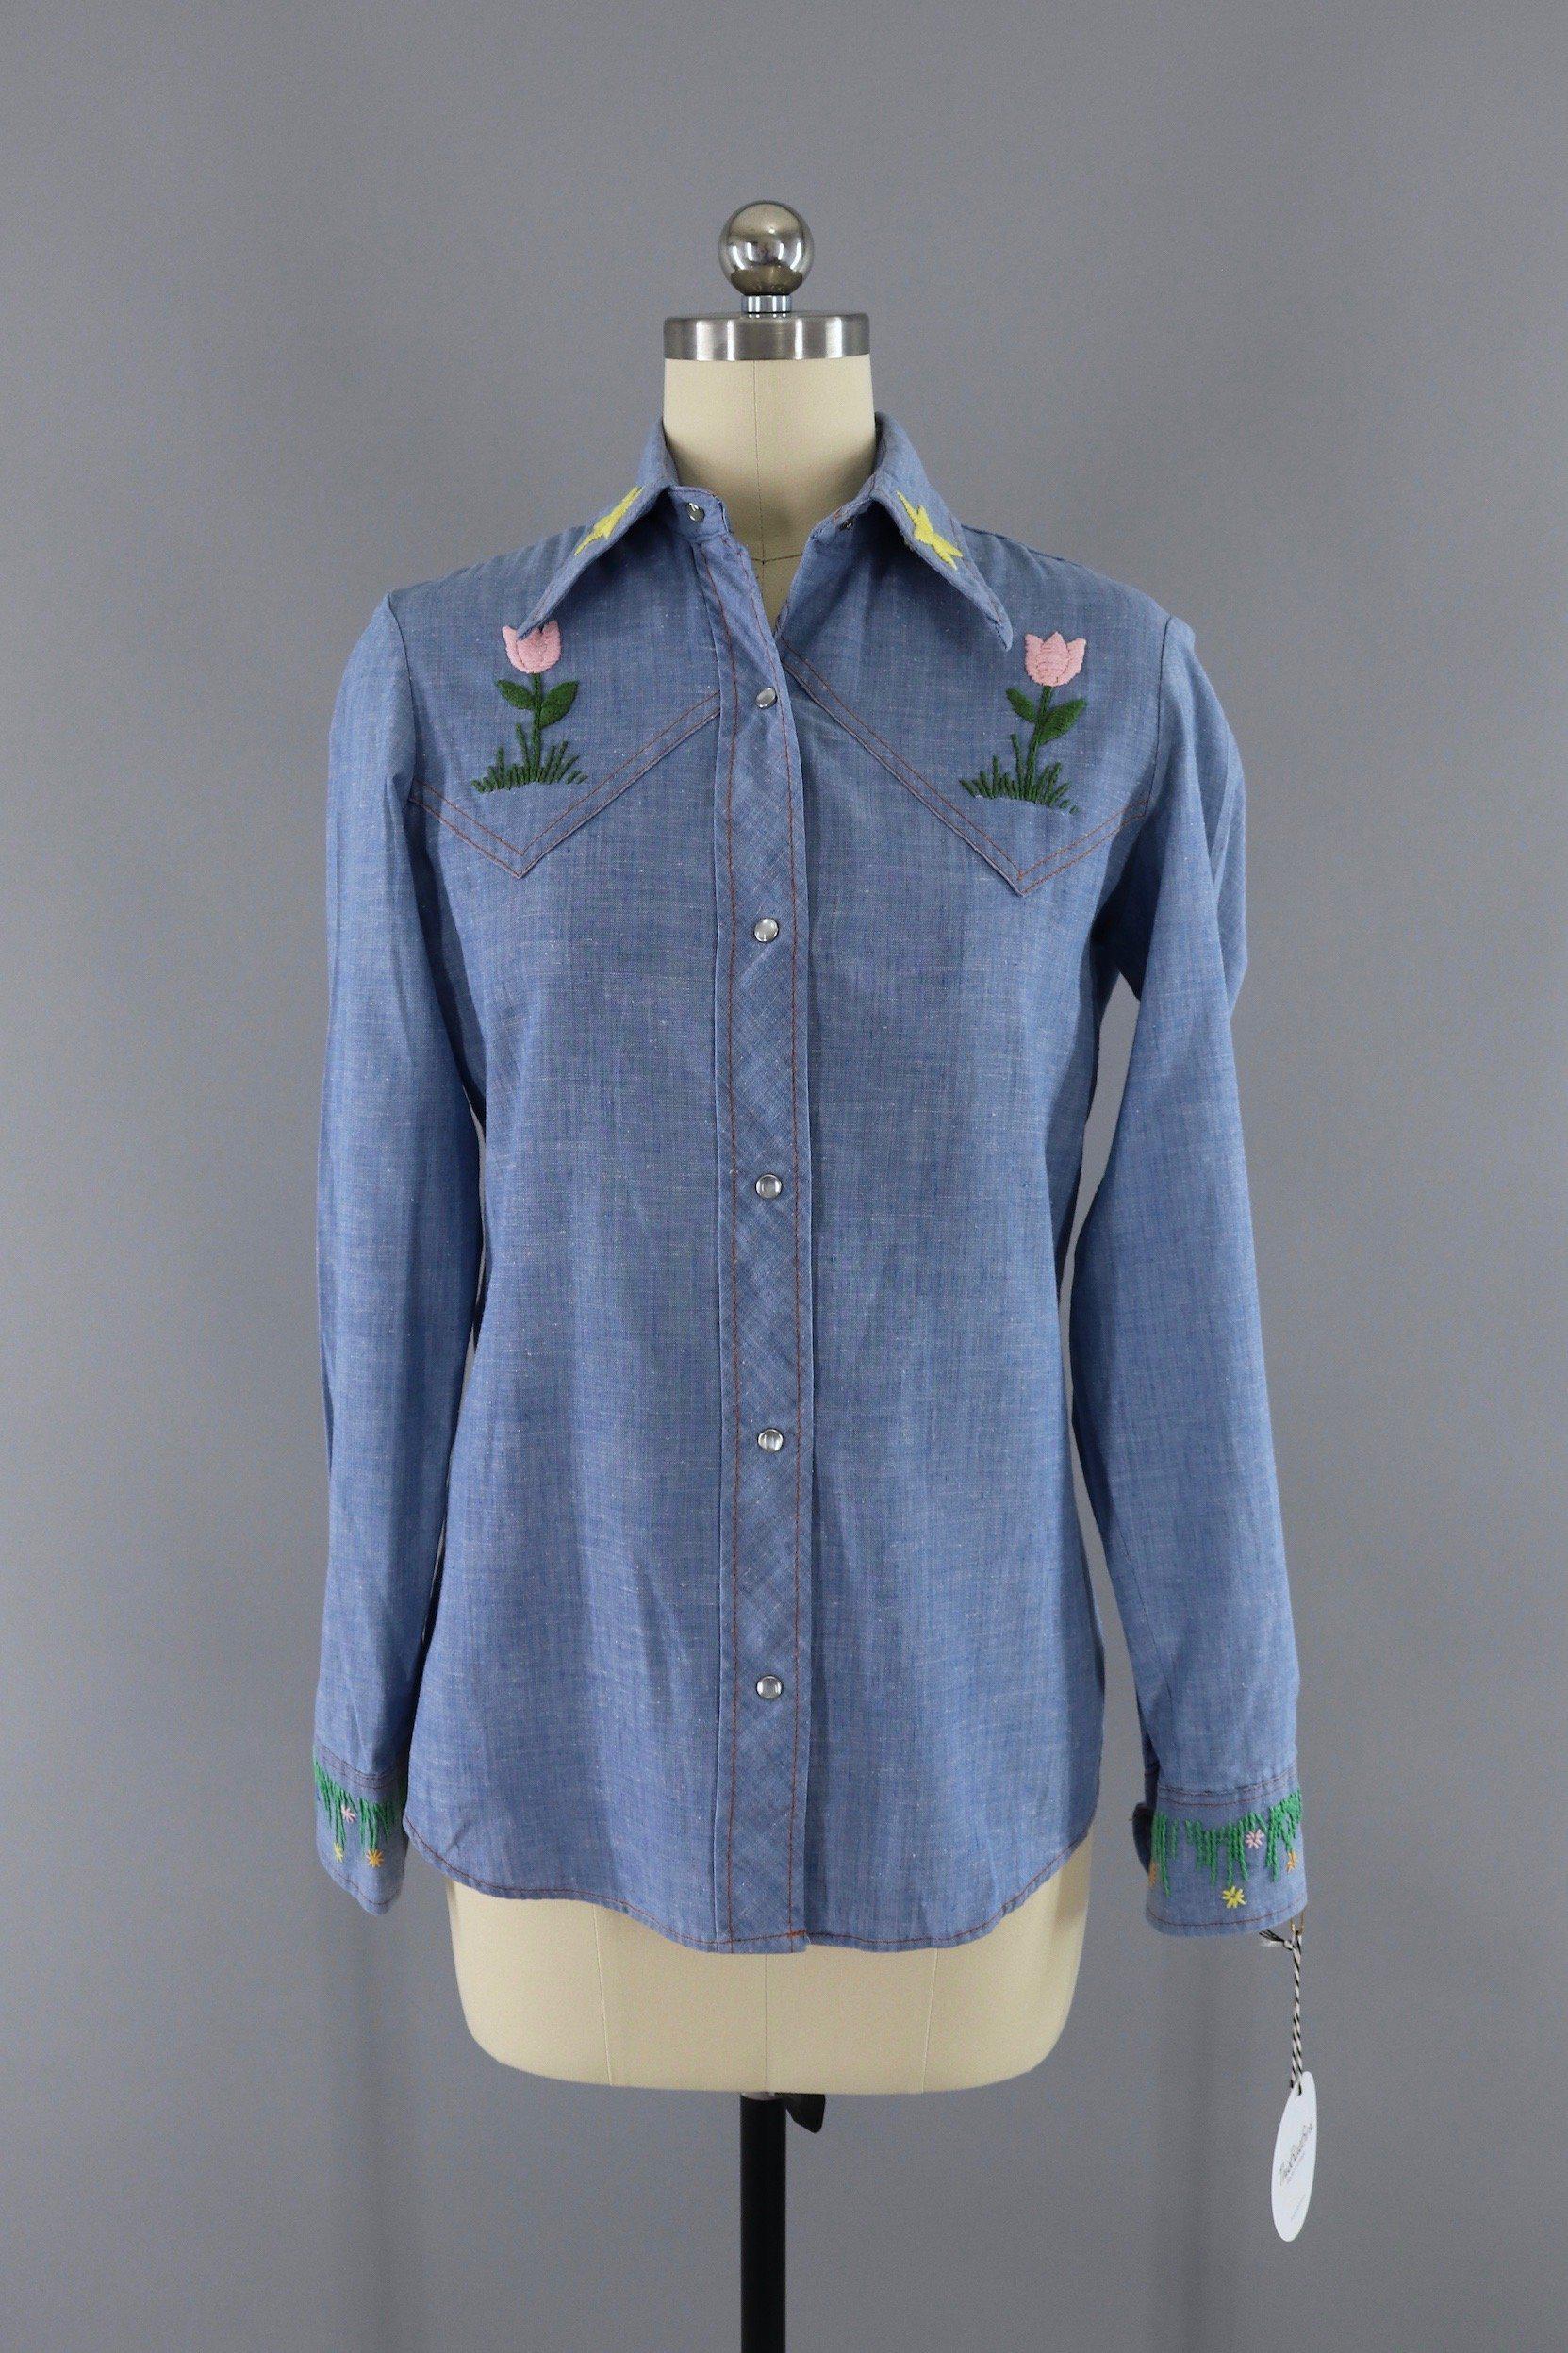 Vintage 1970s Embroidered Levi's Denim Western Shirt